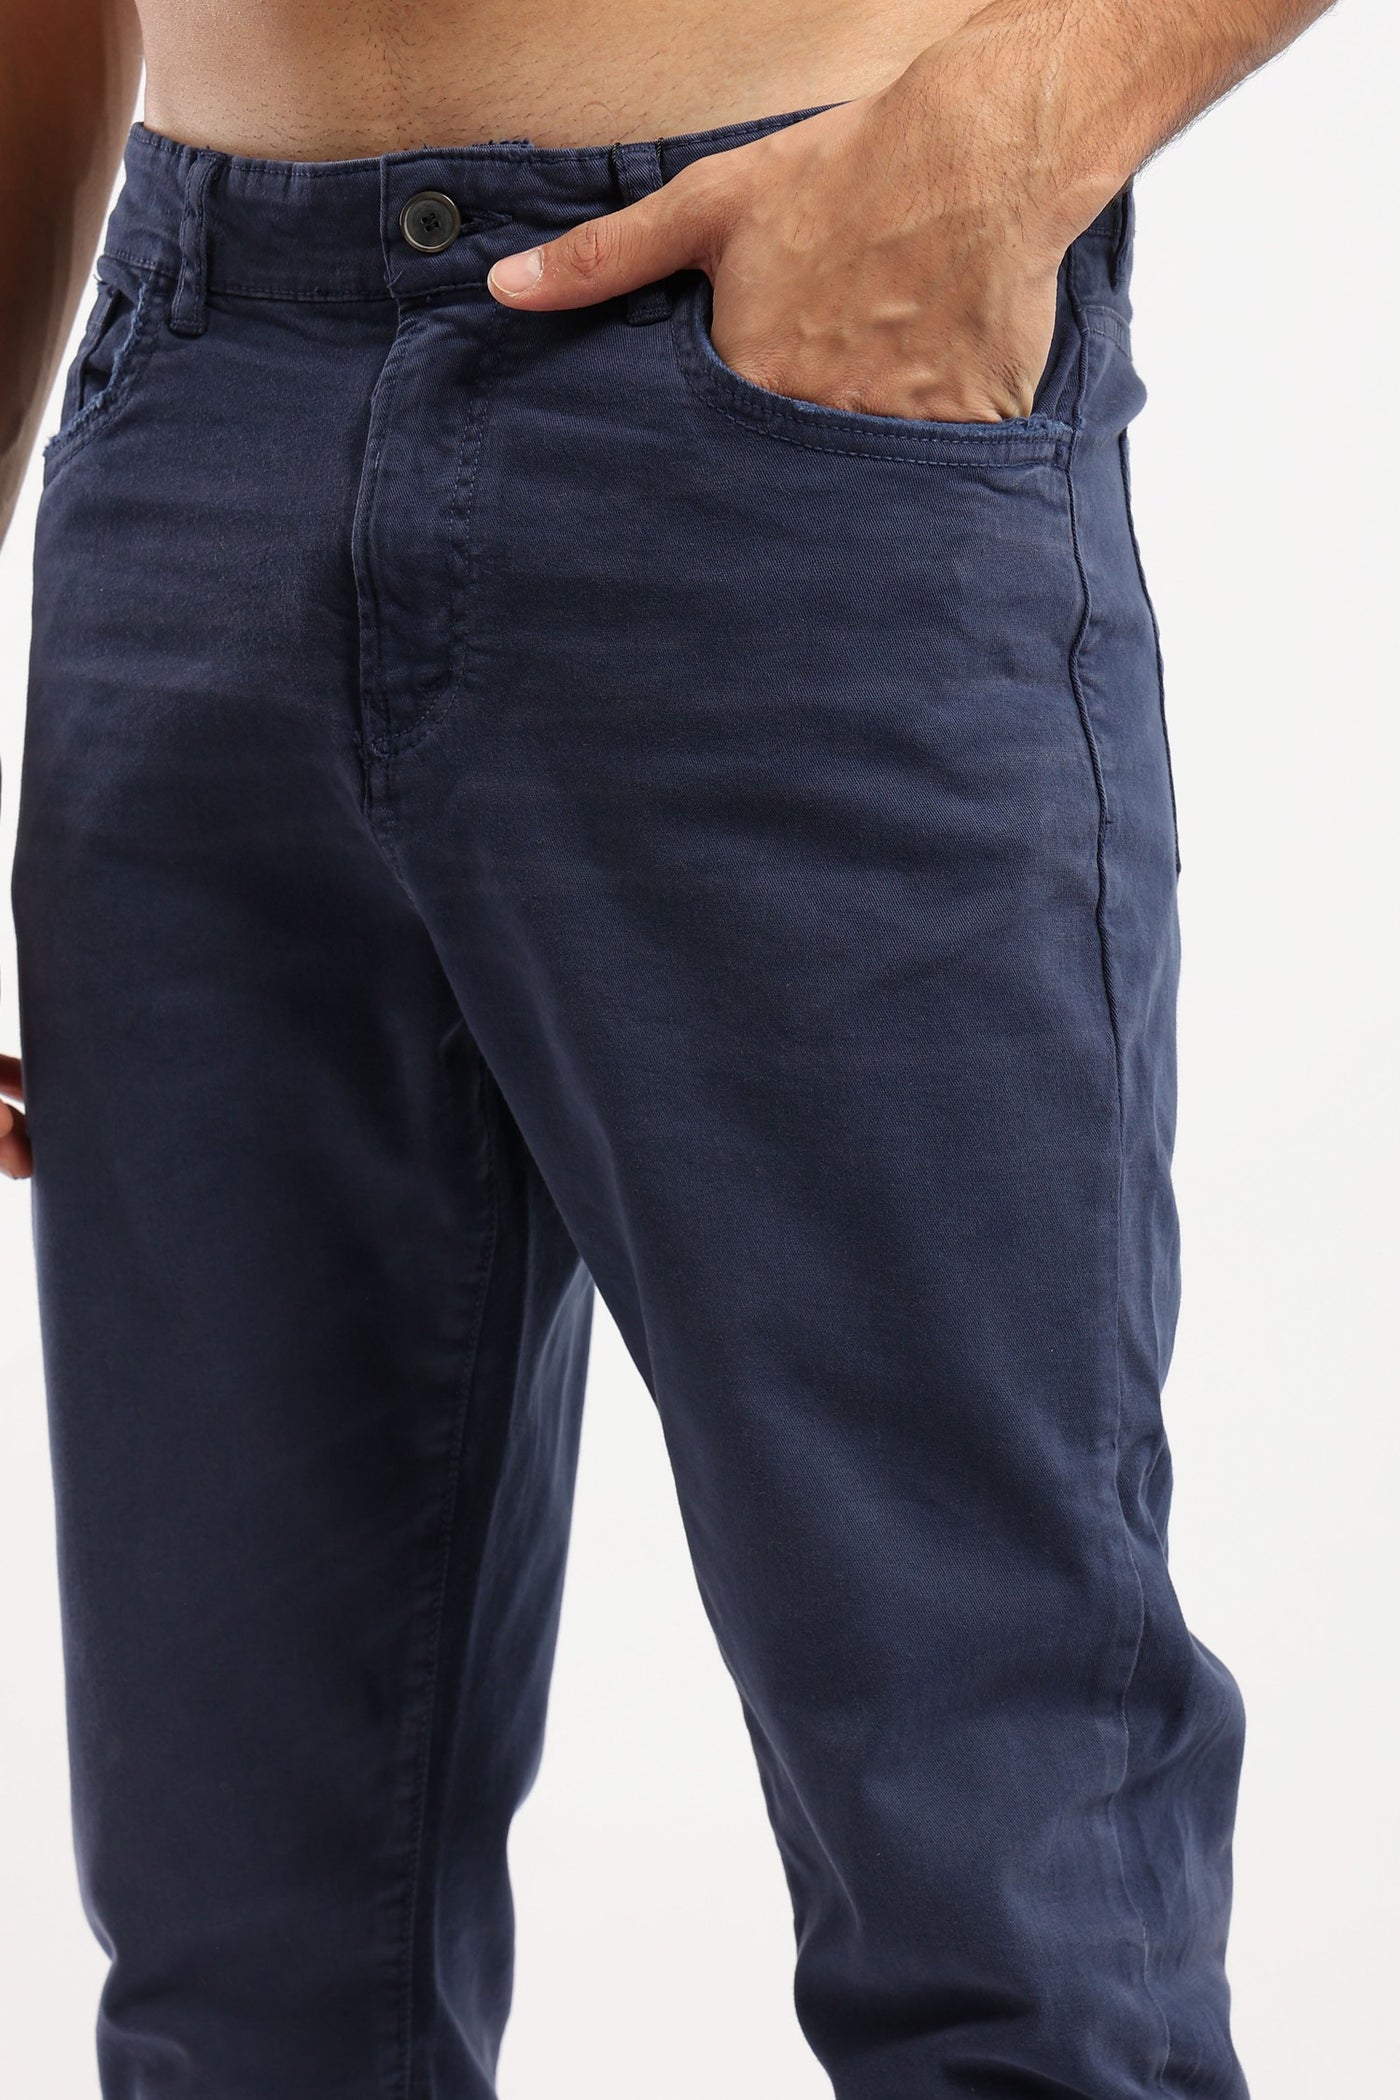 Pants Canvas - 5 Pockets